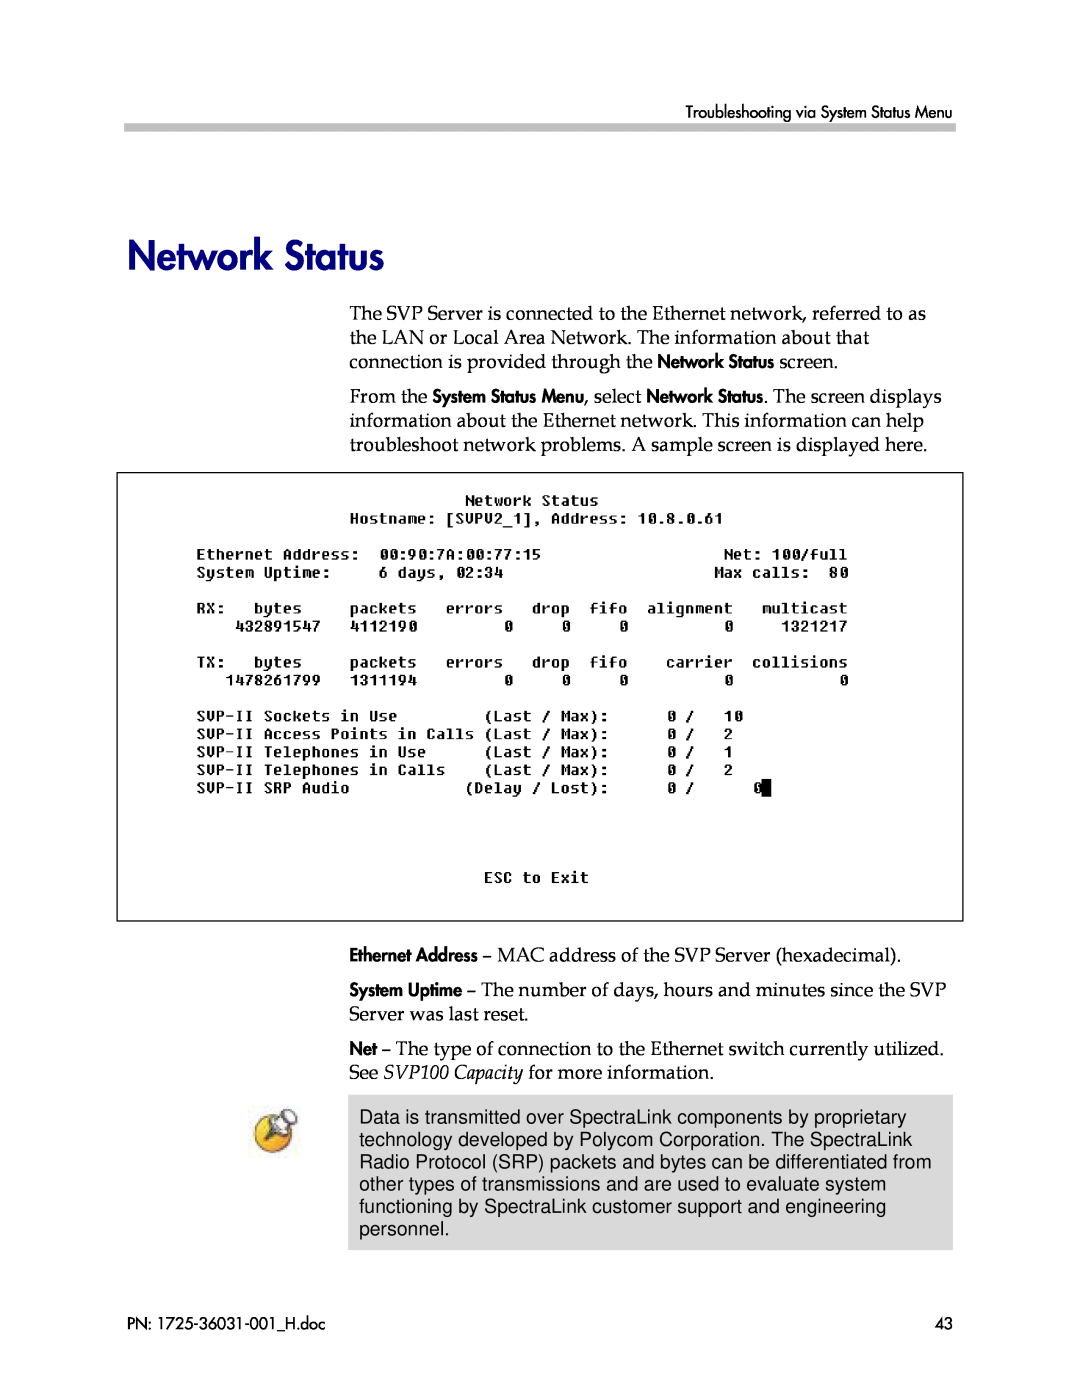 Polycom 1725-36031-001, VP010 manual Network Status 